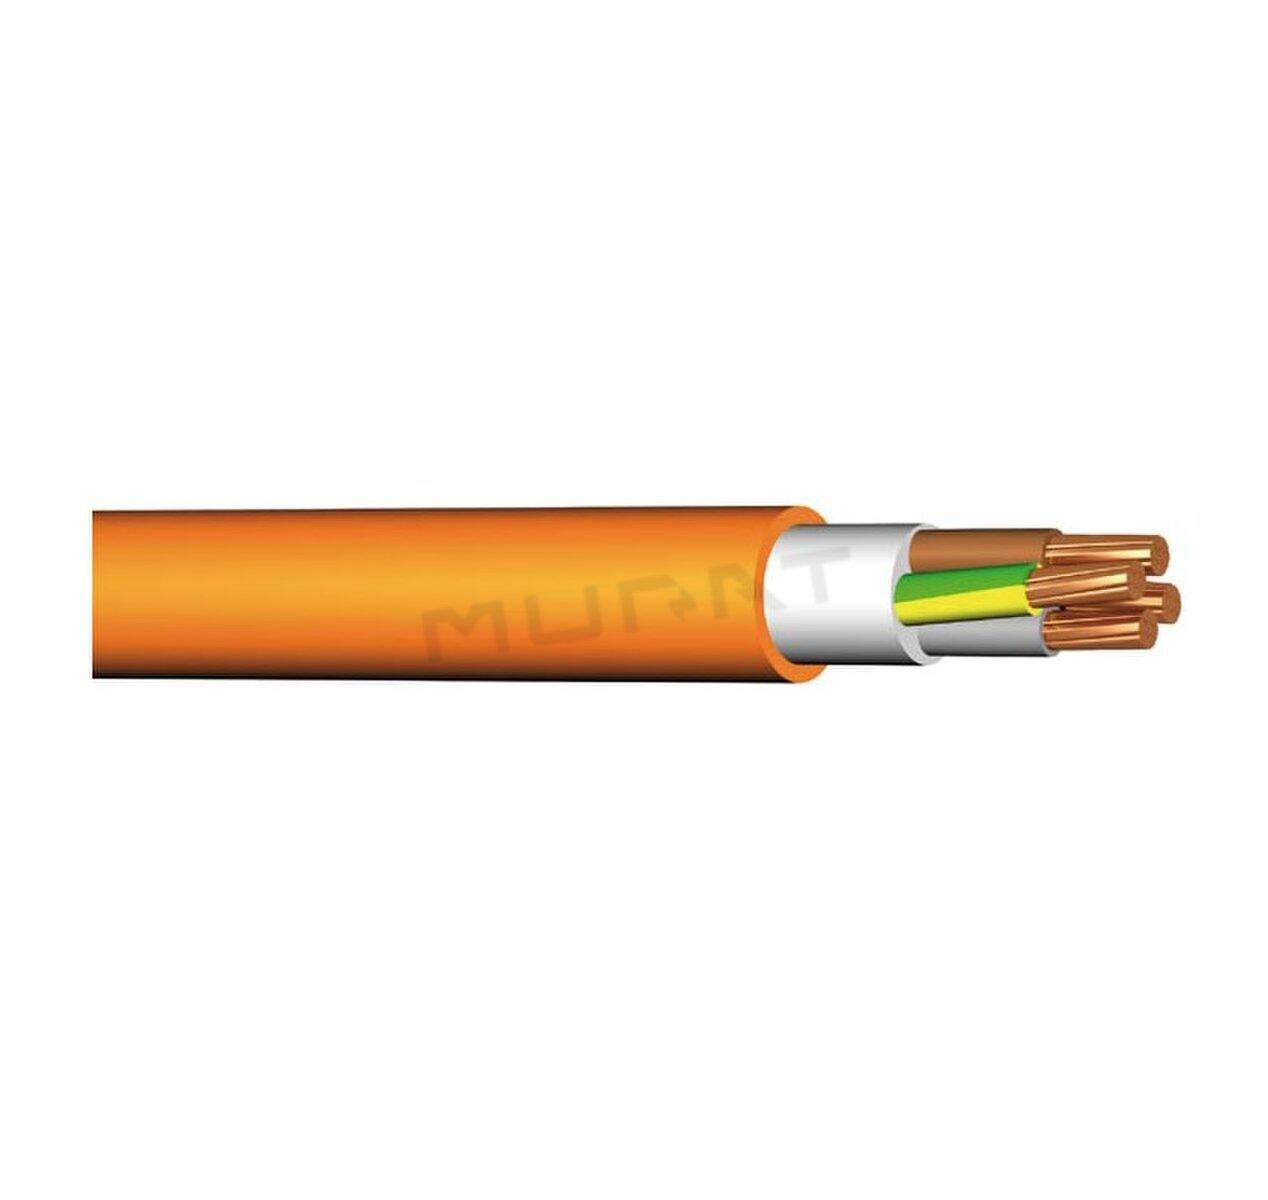 Kábel PRAFlaSafe X-J 1x185 mm2 RM B2ca s1d1a1